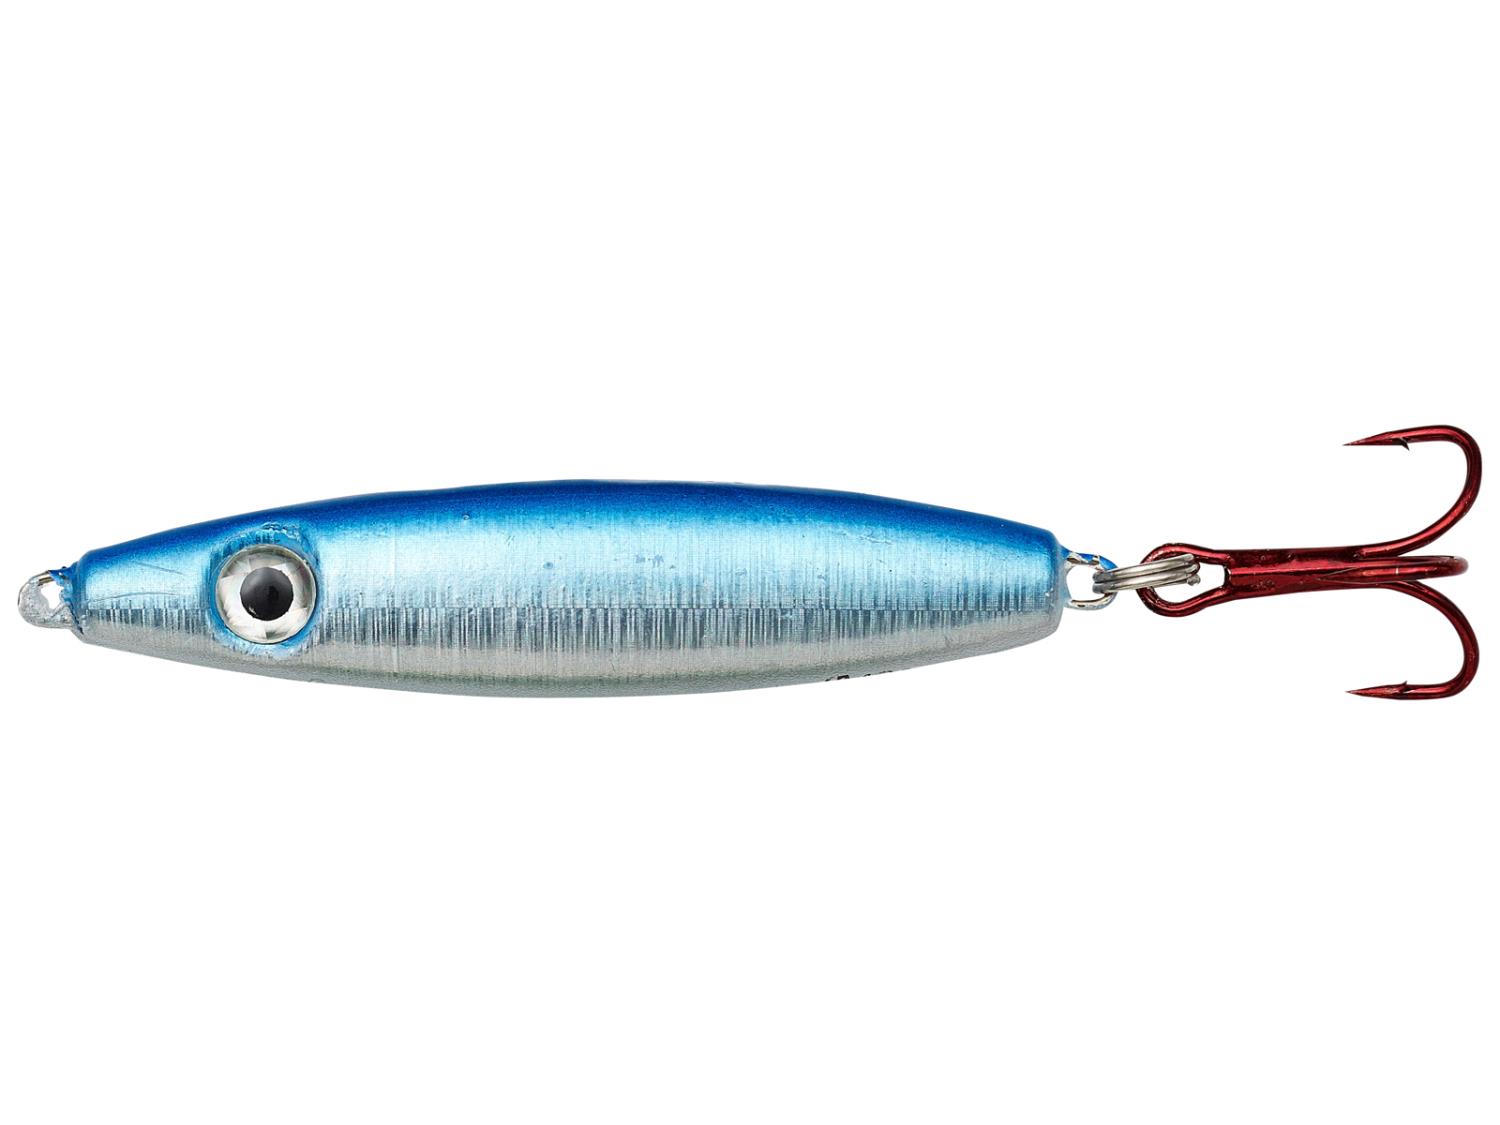 Kinetic Crazy herring 42g Blue/Crystal